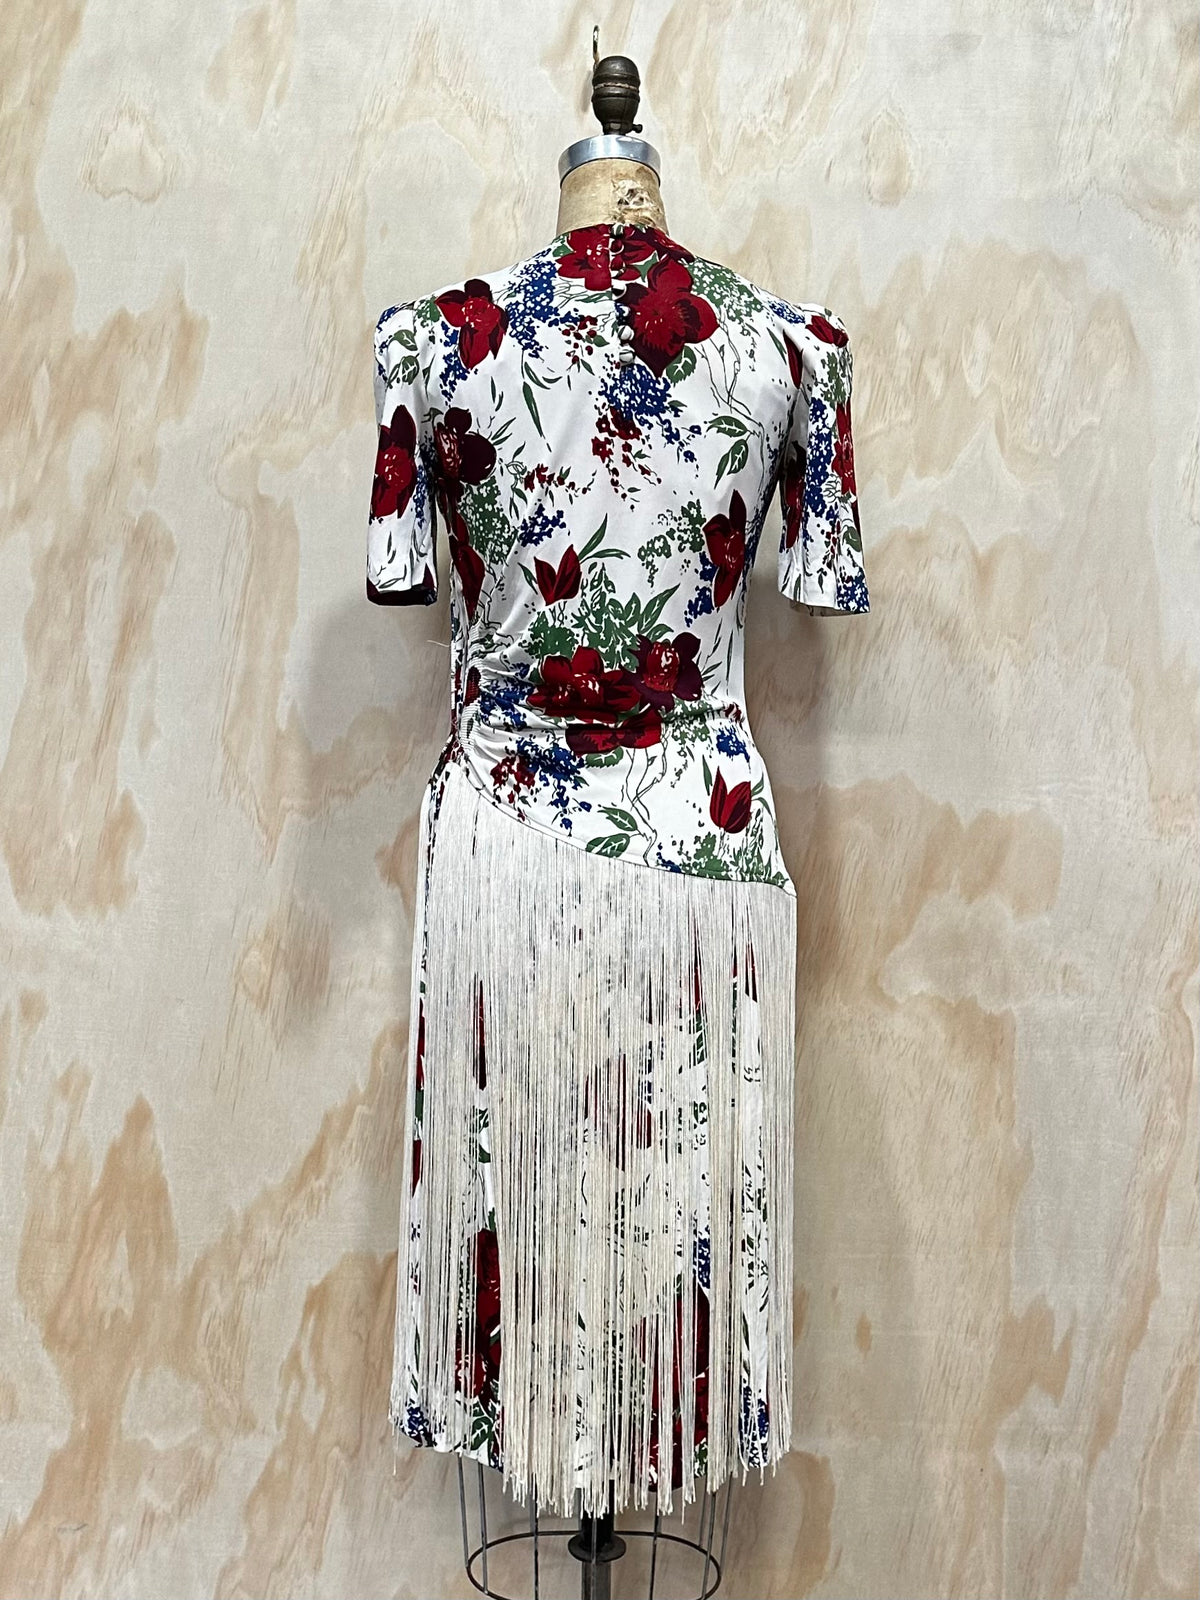 Vintage 70's Floral dress Puff sleeves Fringe dress with tassels